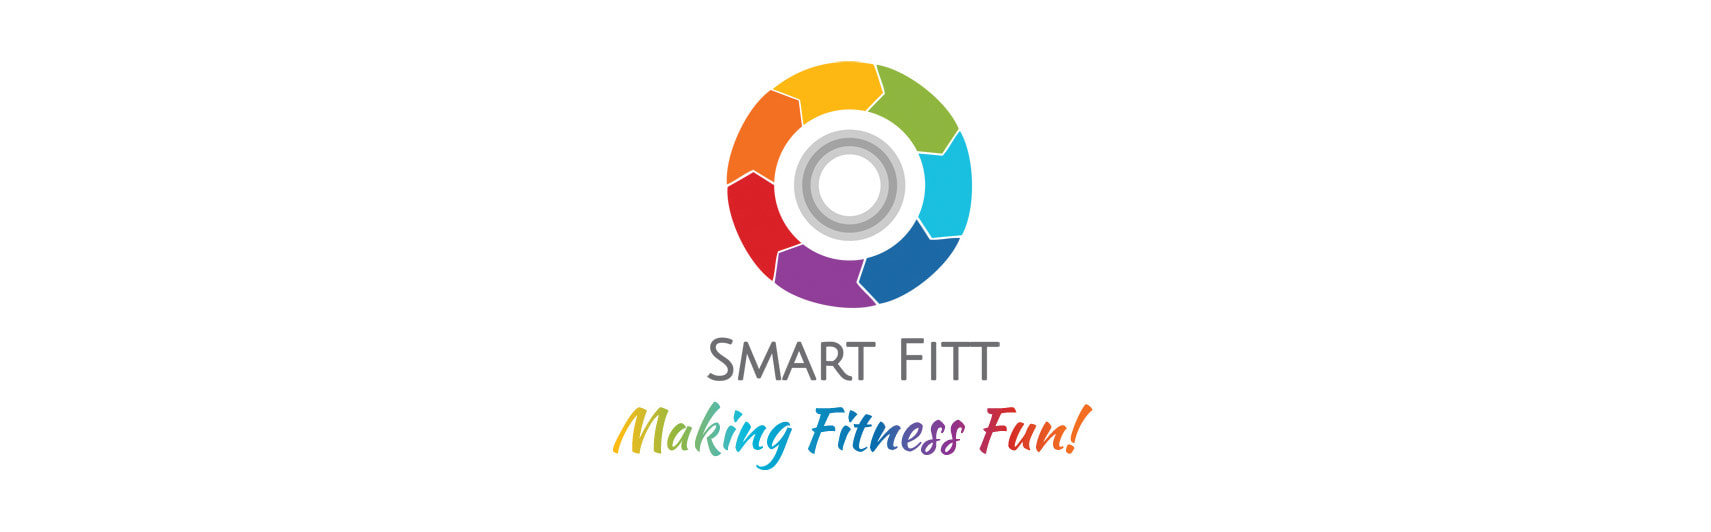 Smart Fitt Fitness